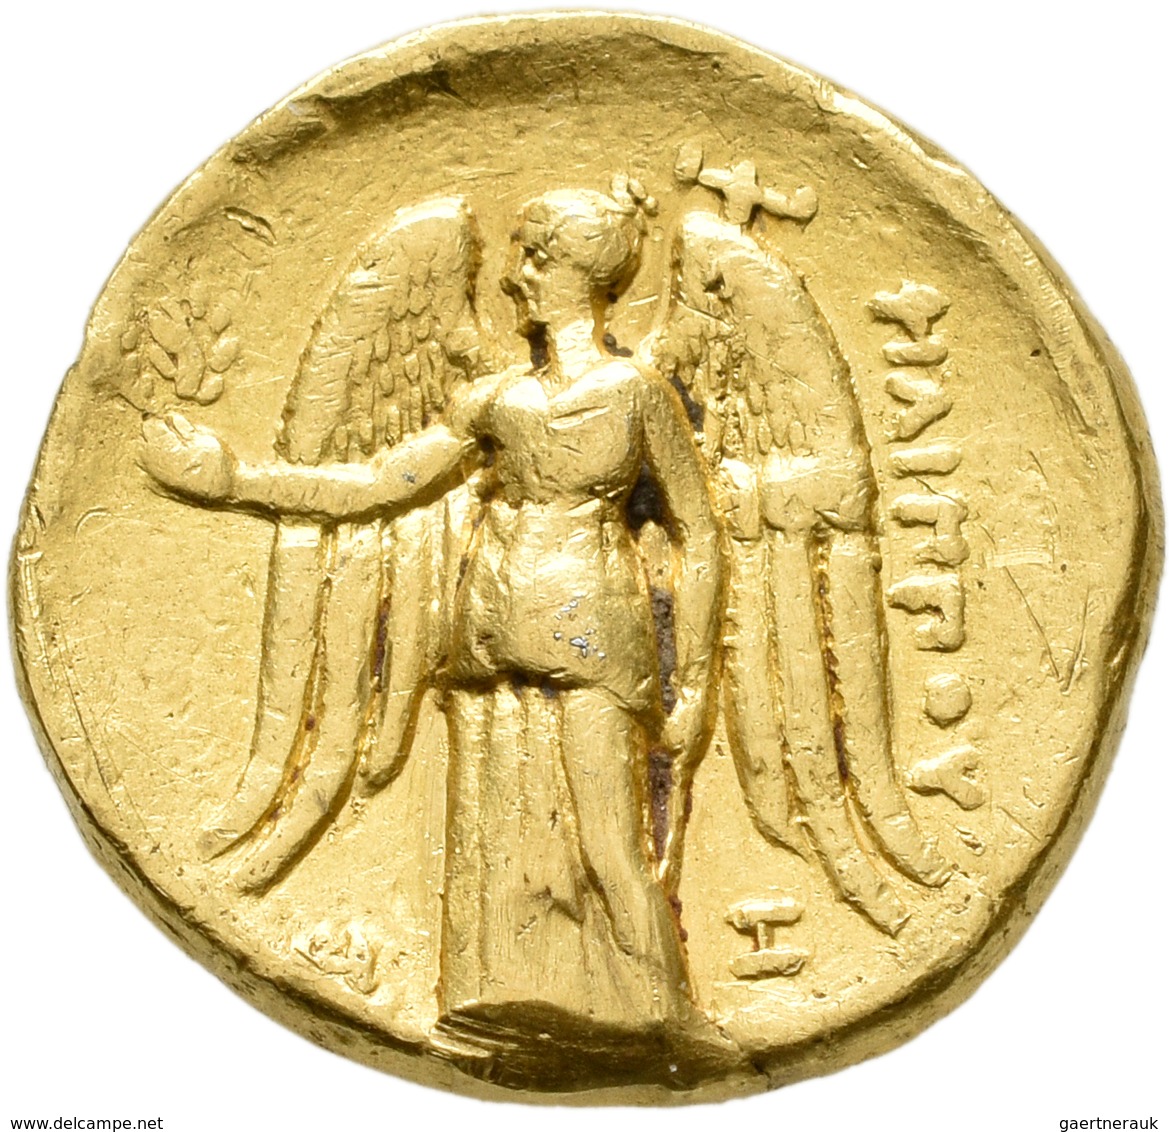 Makedonien - Könige: Philipp III. Arrchidaios 323-317 V.Chr: GOLD Stater, "Arados"? 323-316 V. C., V - Griekenland